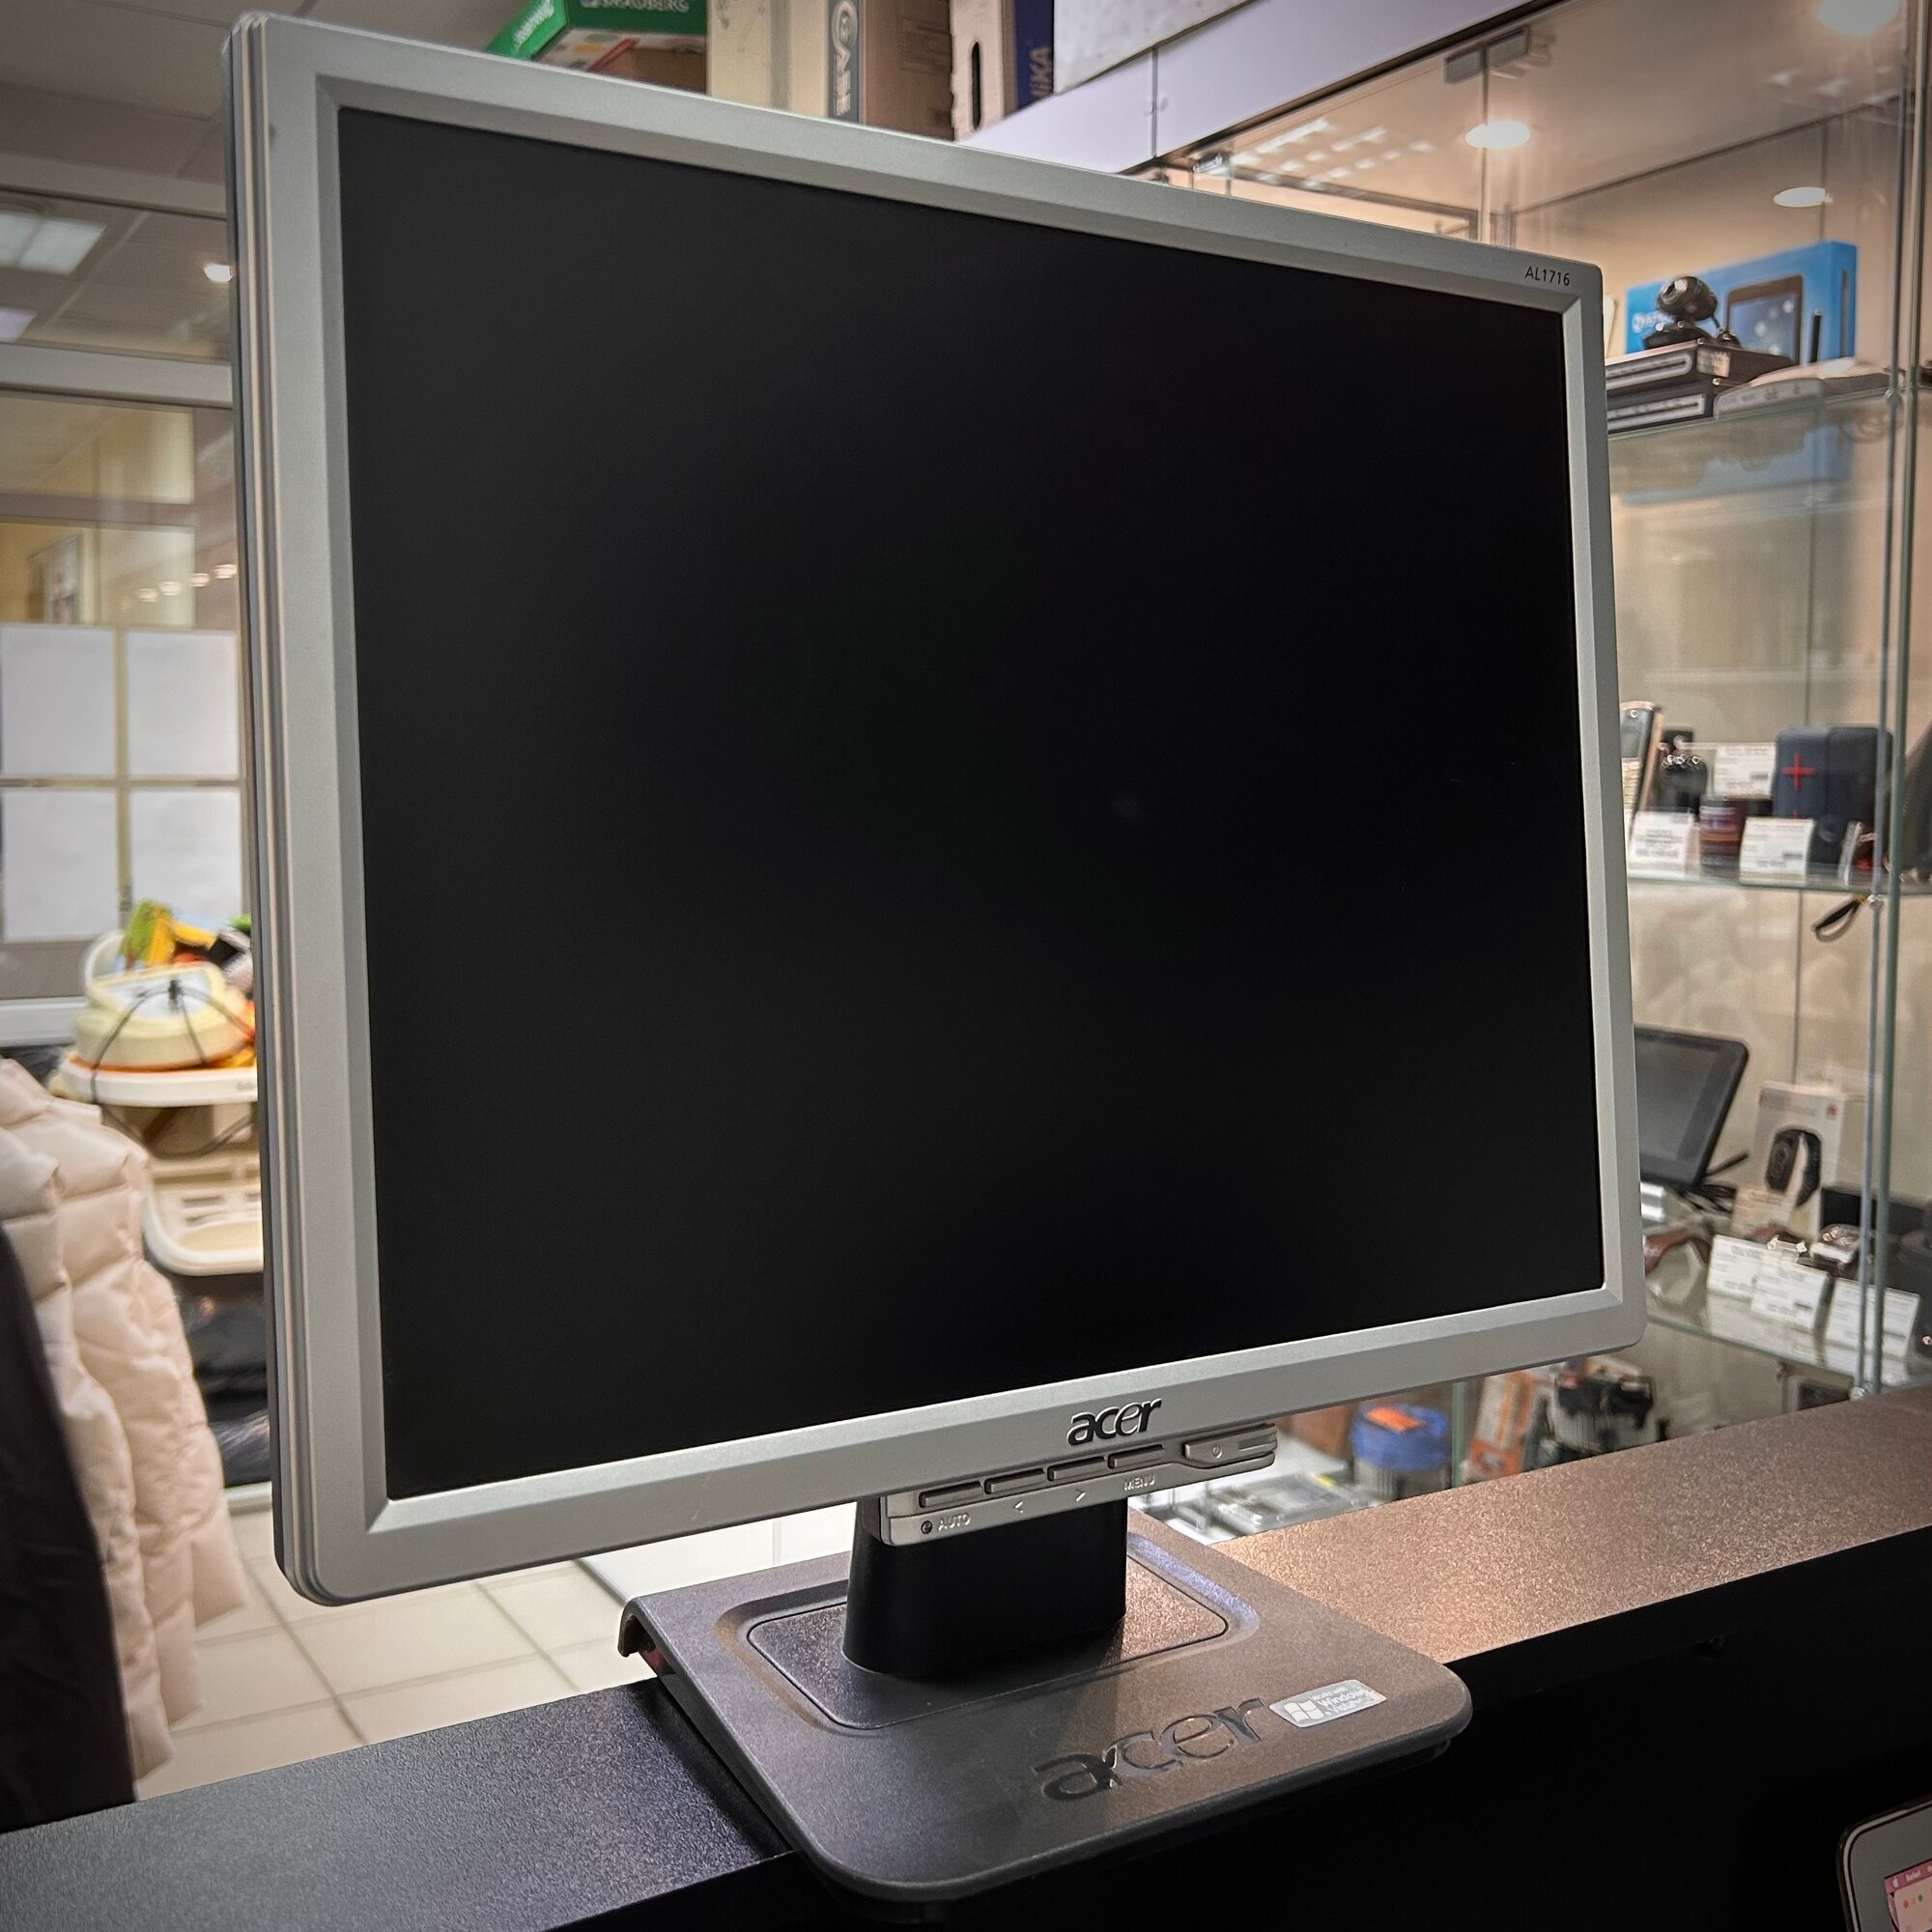 Монитор LCD 17 дюймов. Acer AL1716. 1280x1024, 75 Гц, TN, серый.